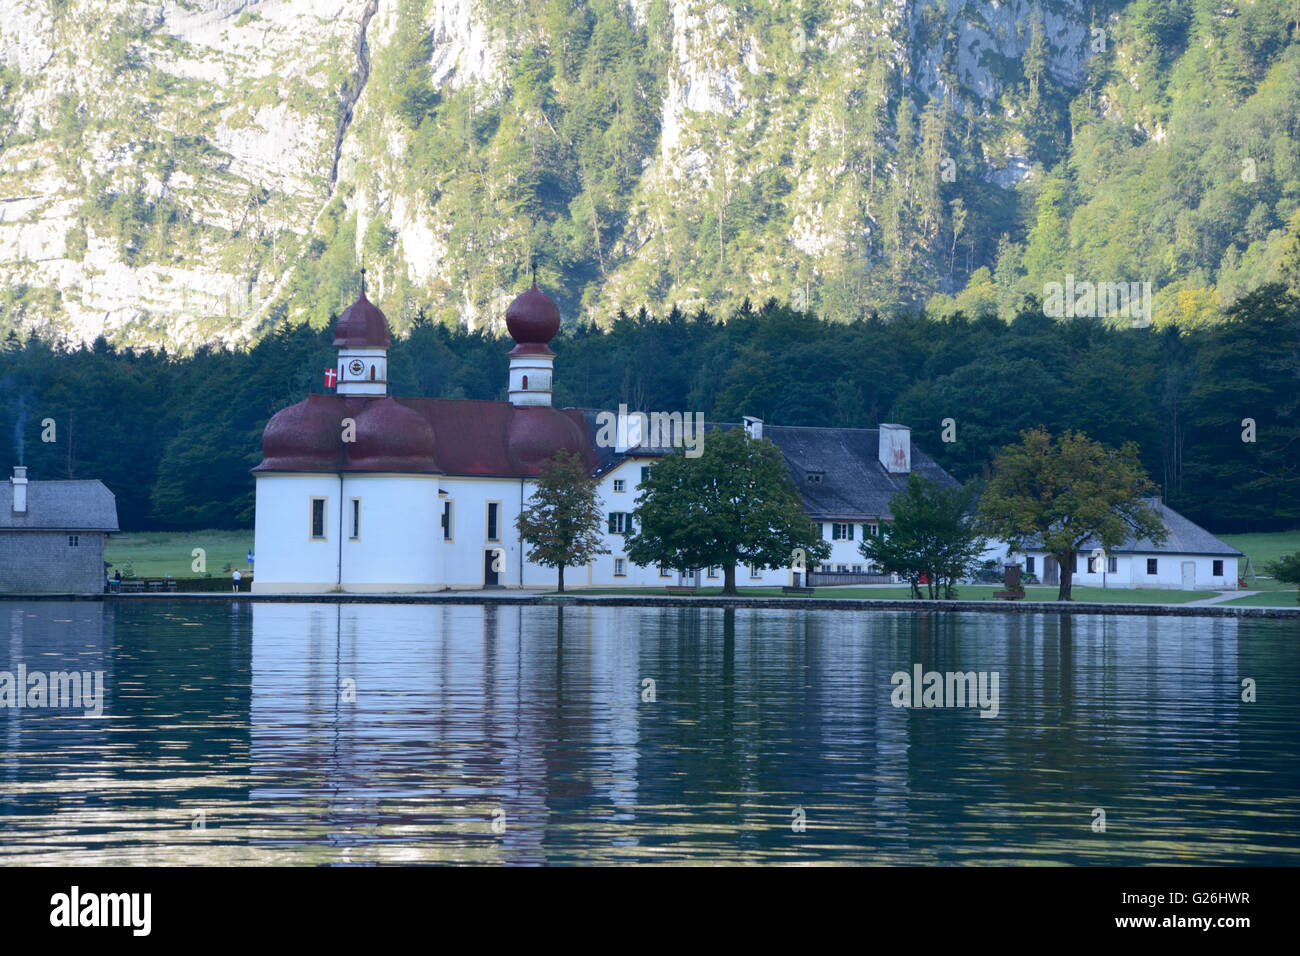 Schonau am Konigssee, Germany - August 30, 2015: Early morning at St. Bartholoma church at Koenigssee lake nearby Schonau am Kon Stock Photo